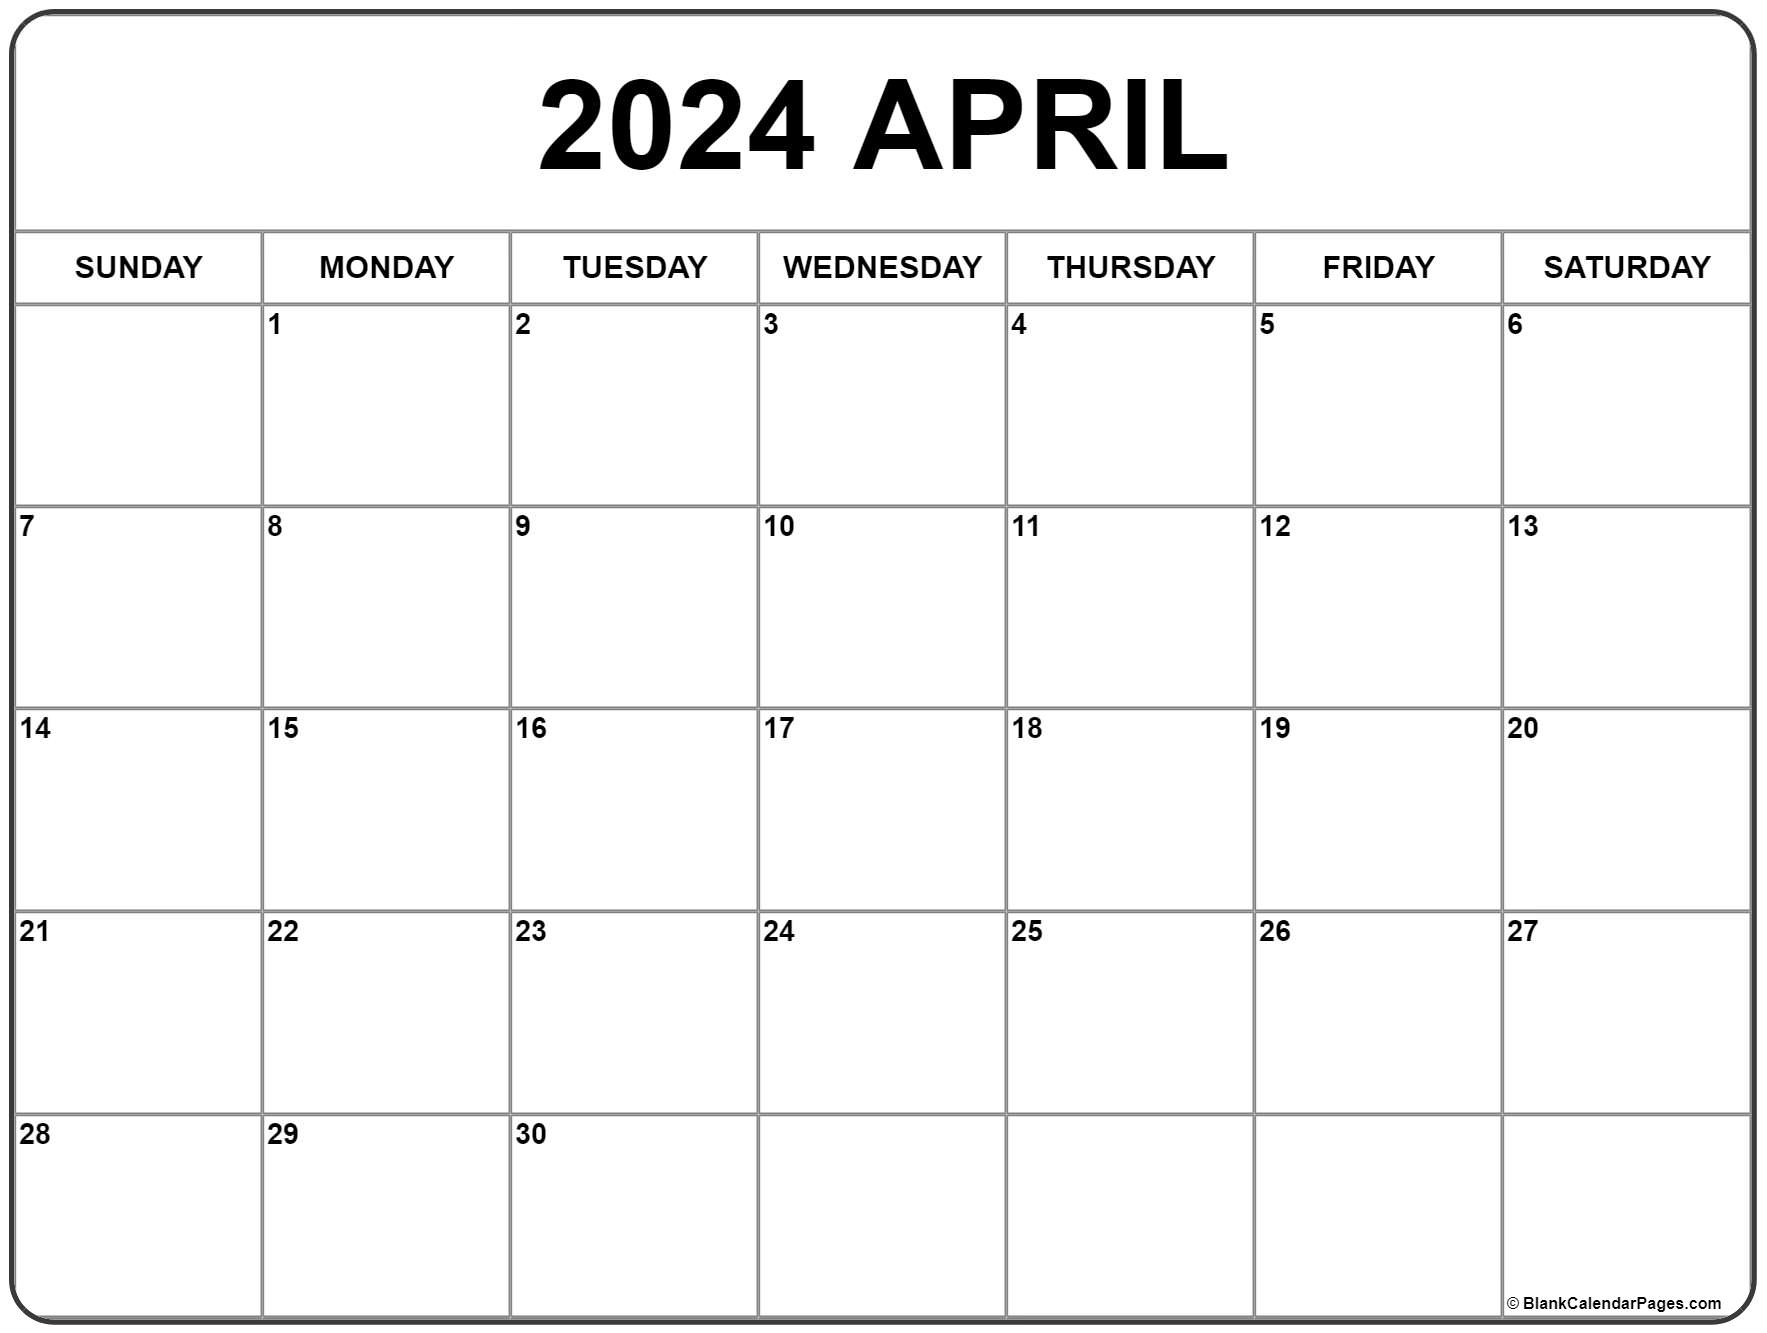 April 2024 Calendar | Free Printable Calendar | Printable Calendar April 2024 To March 2025